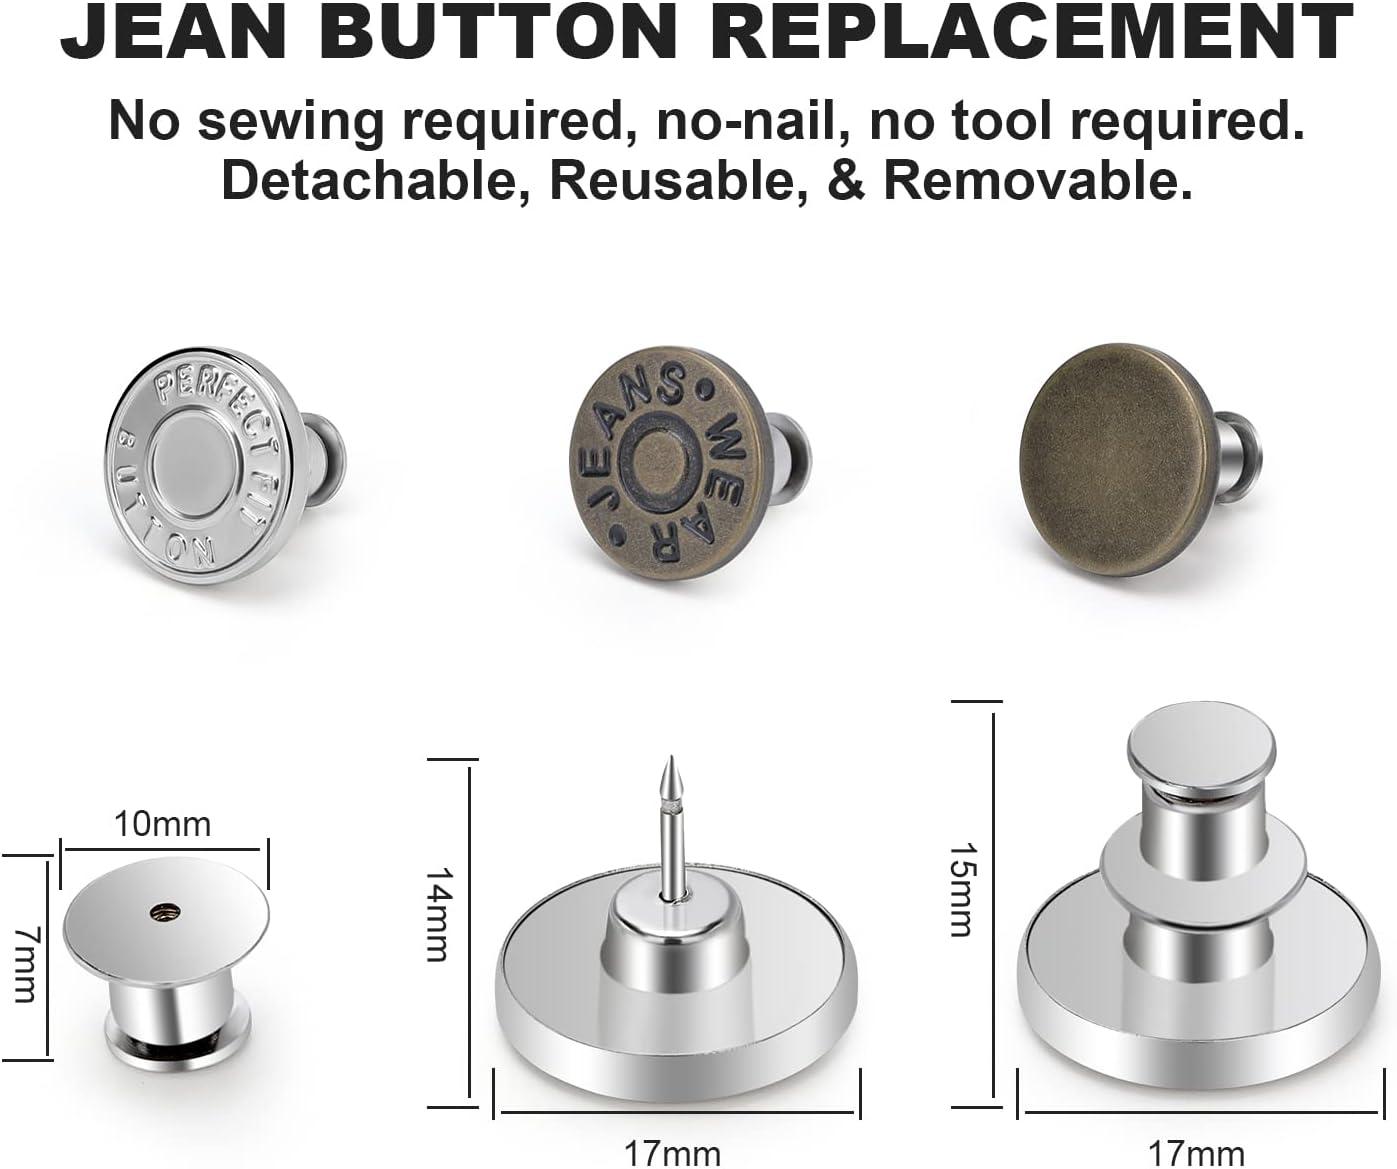 3 Pieces Adjustable Pins Replacement Removable , , Detachable Pants Button  - AliExpress